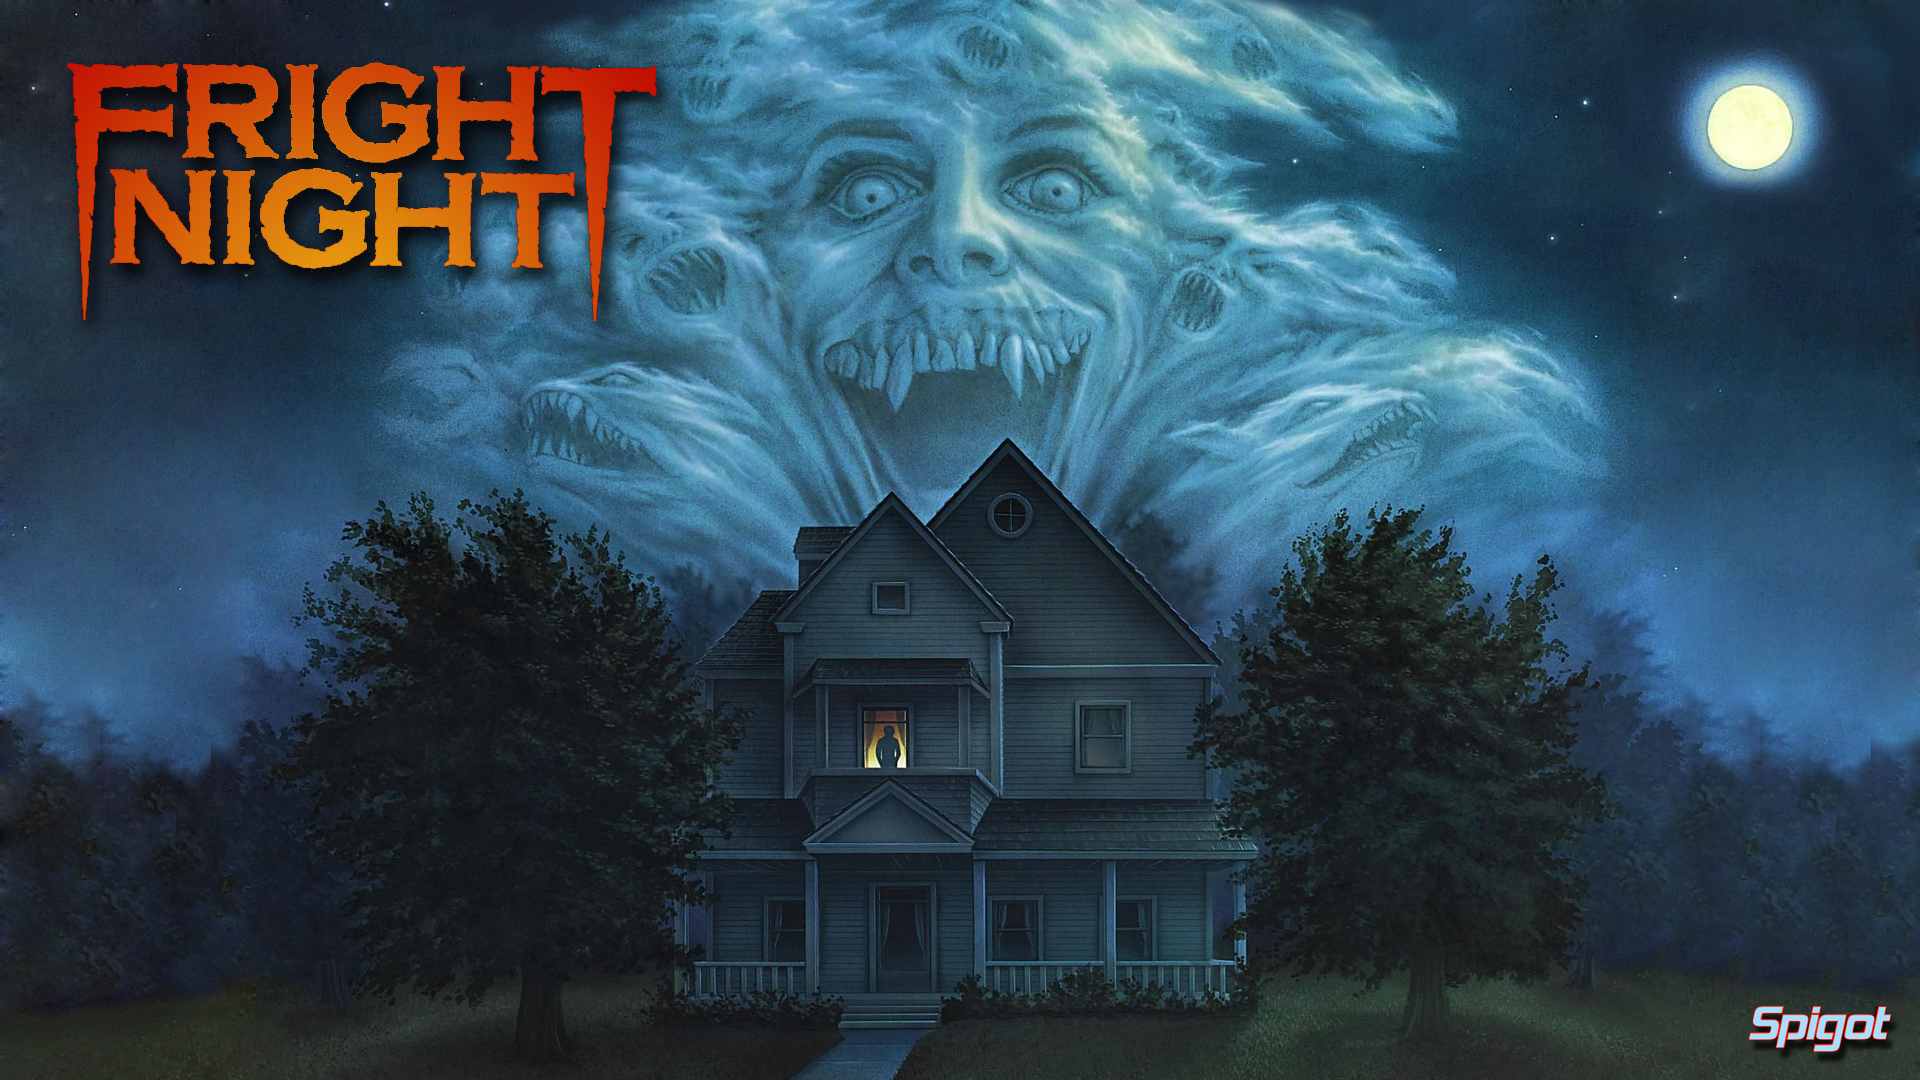 Fright Night George Spigot S